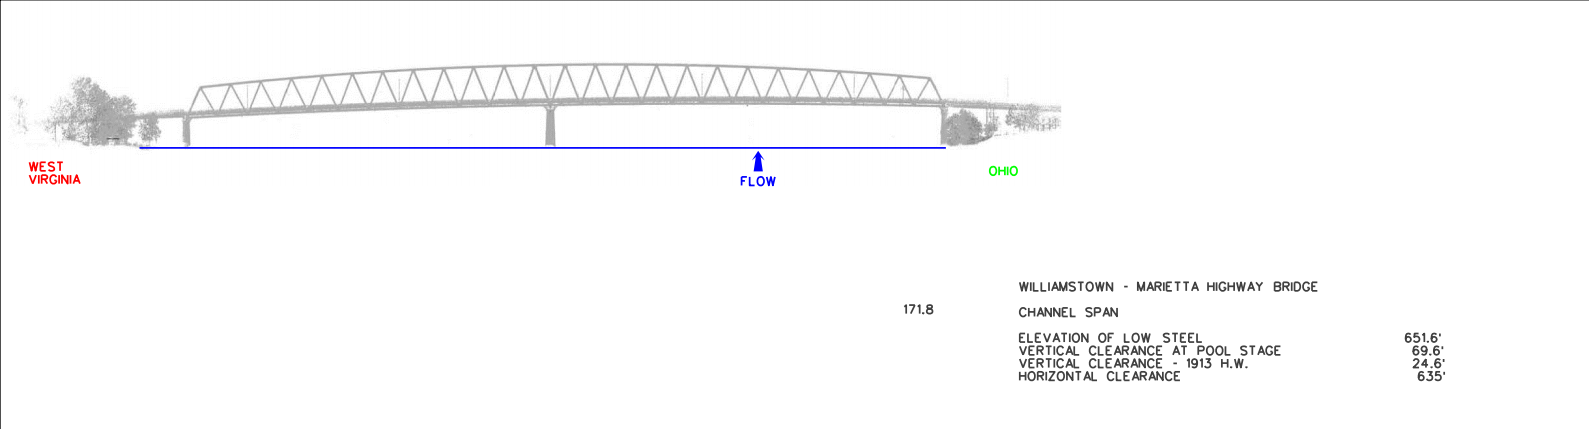 Williamstown - Marietta Hwy Bridge Clearances | Bridge Calculator LLC